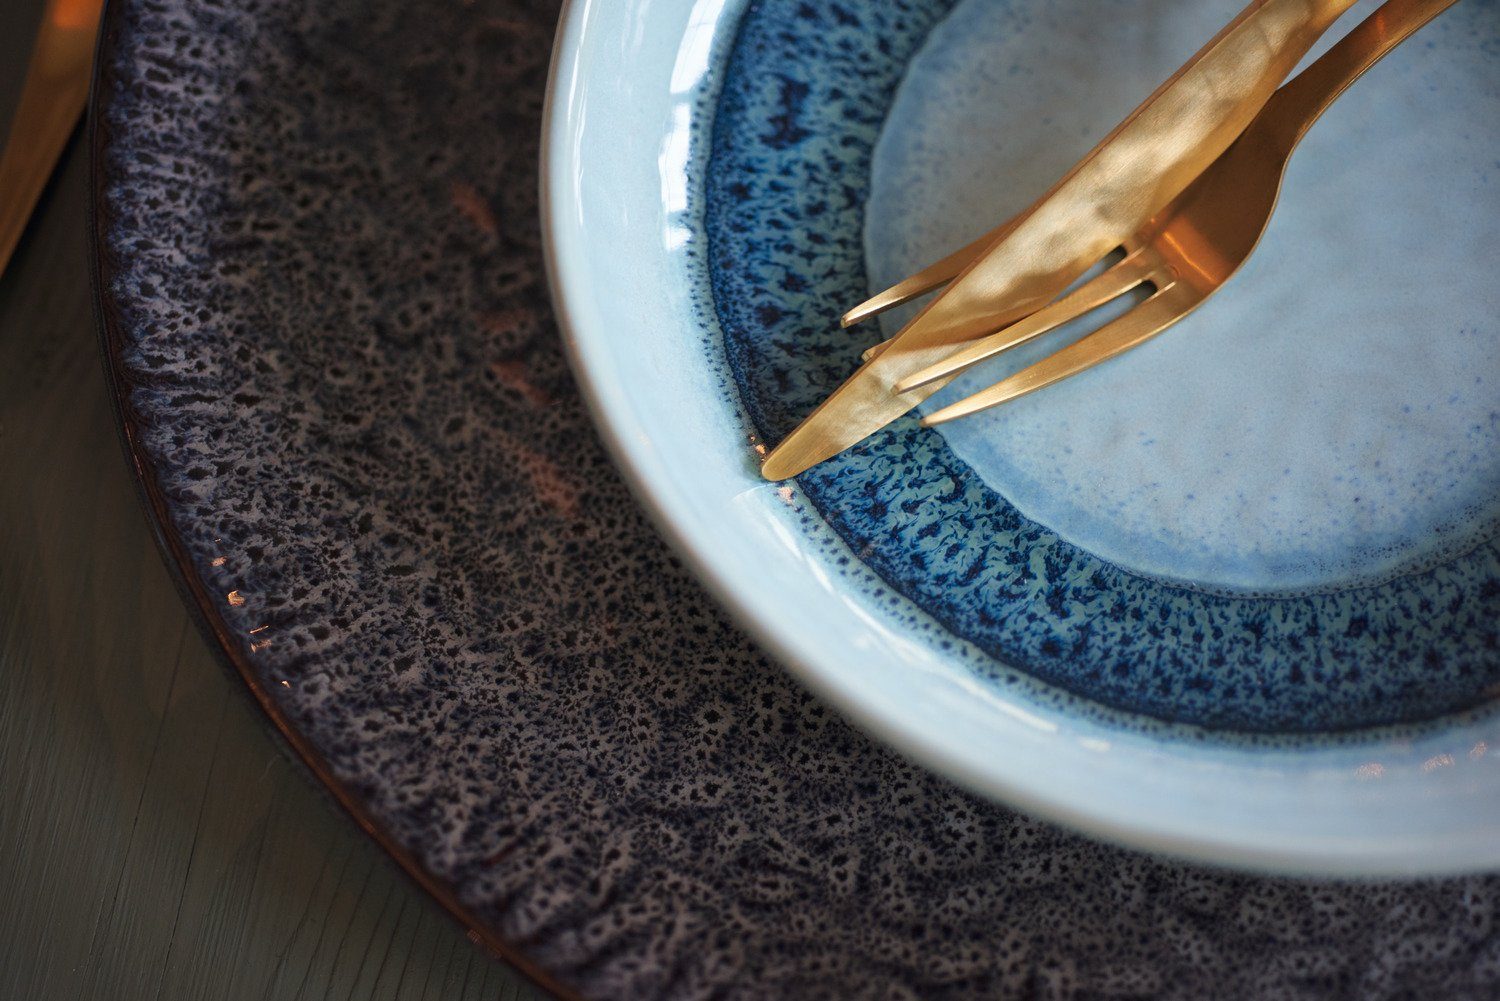 Suppenteller 21 (6 Ø LEONARDO cm blau St), Matera, Keramik,